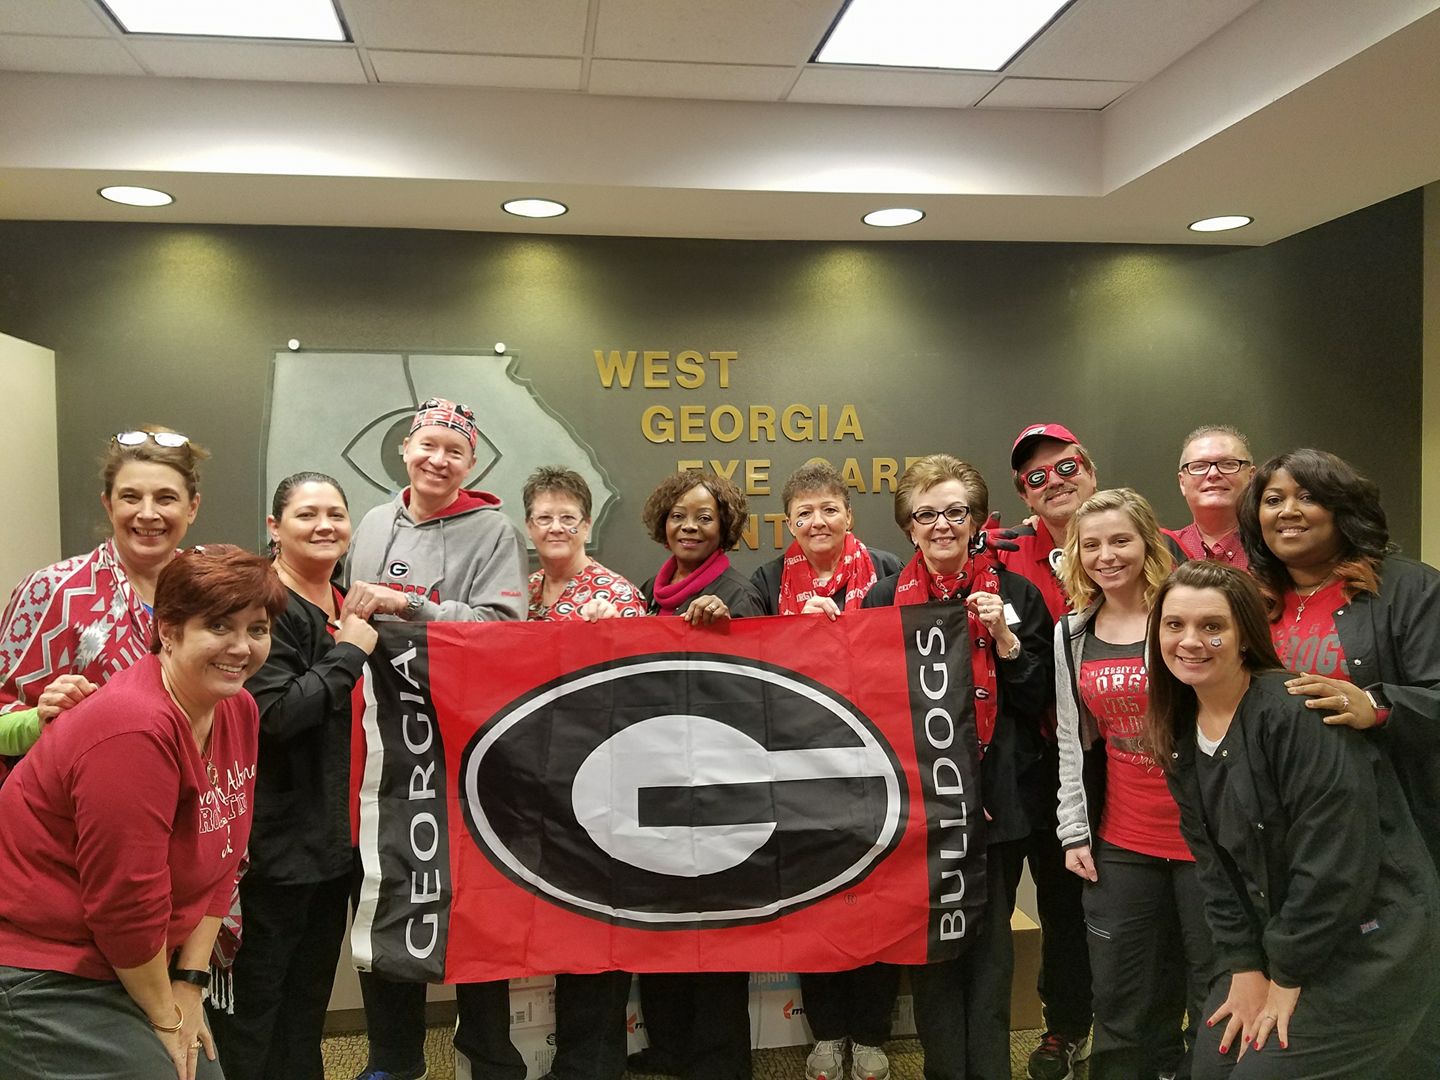 Georgia Bulldogs Championship Team at West Georgia Eye Care Center